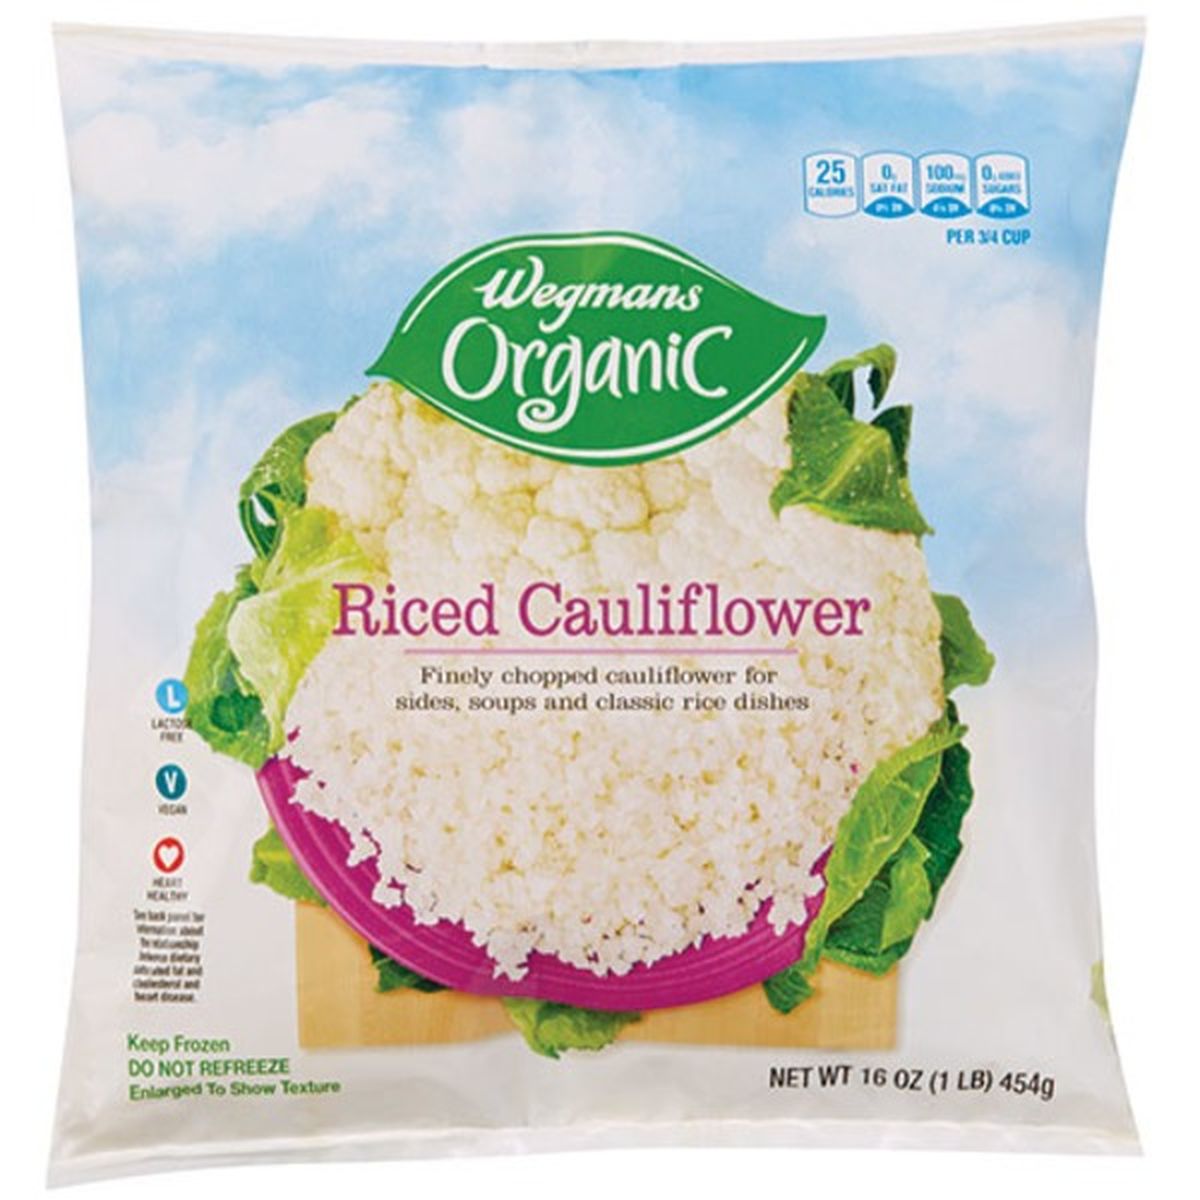 Calories in Wegmans Organic Riced Cauliflower